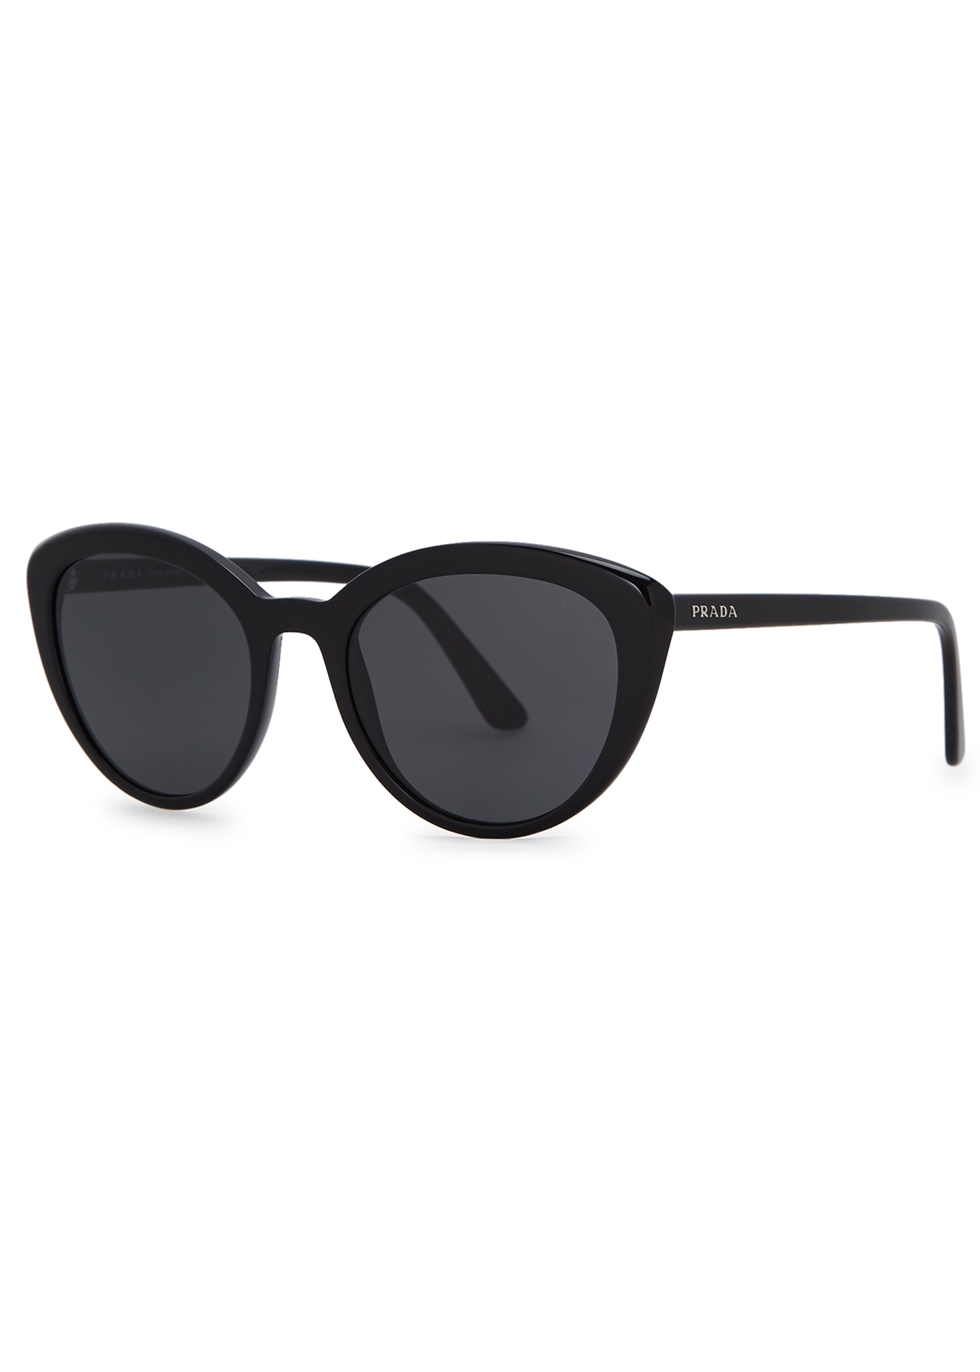 prada cat eye acetate sunglasses